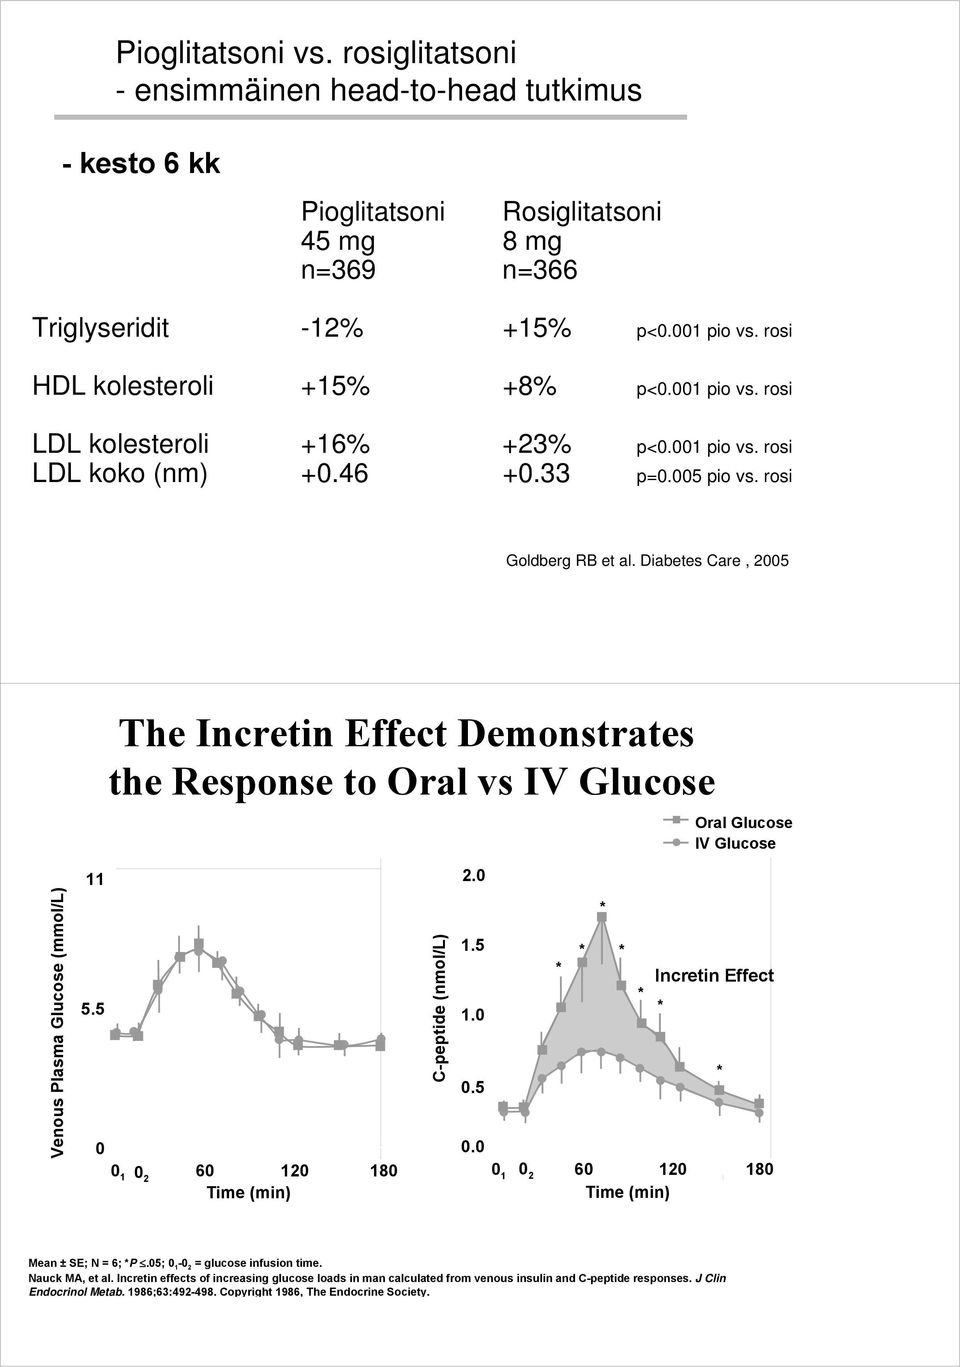 Diabetes Care, 2005 The Incretin Effect Demonstrates the Response to Oral vs IV Glucose Oral Glucose IV Glucose Venous Plasma Glucose (mmol/l) 11 5.5 C-peptide (nmol/l) 0 0.